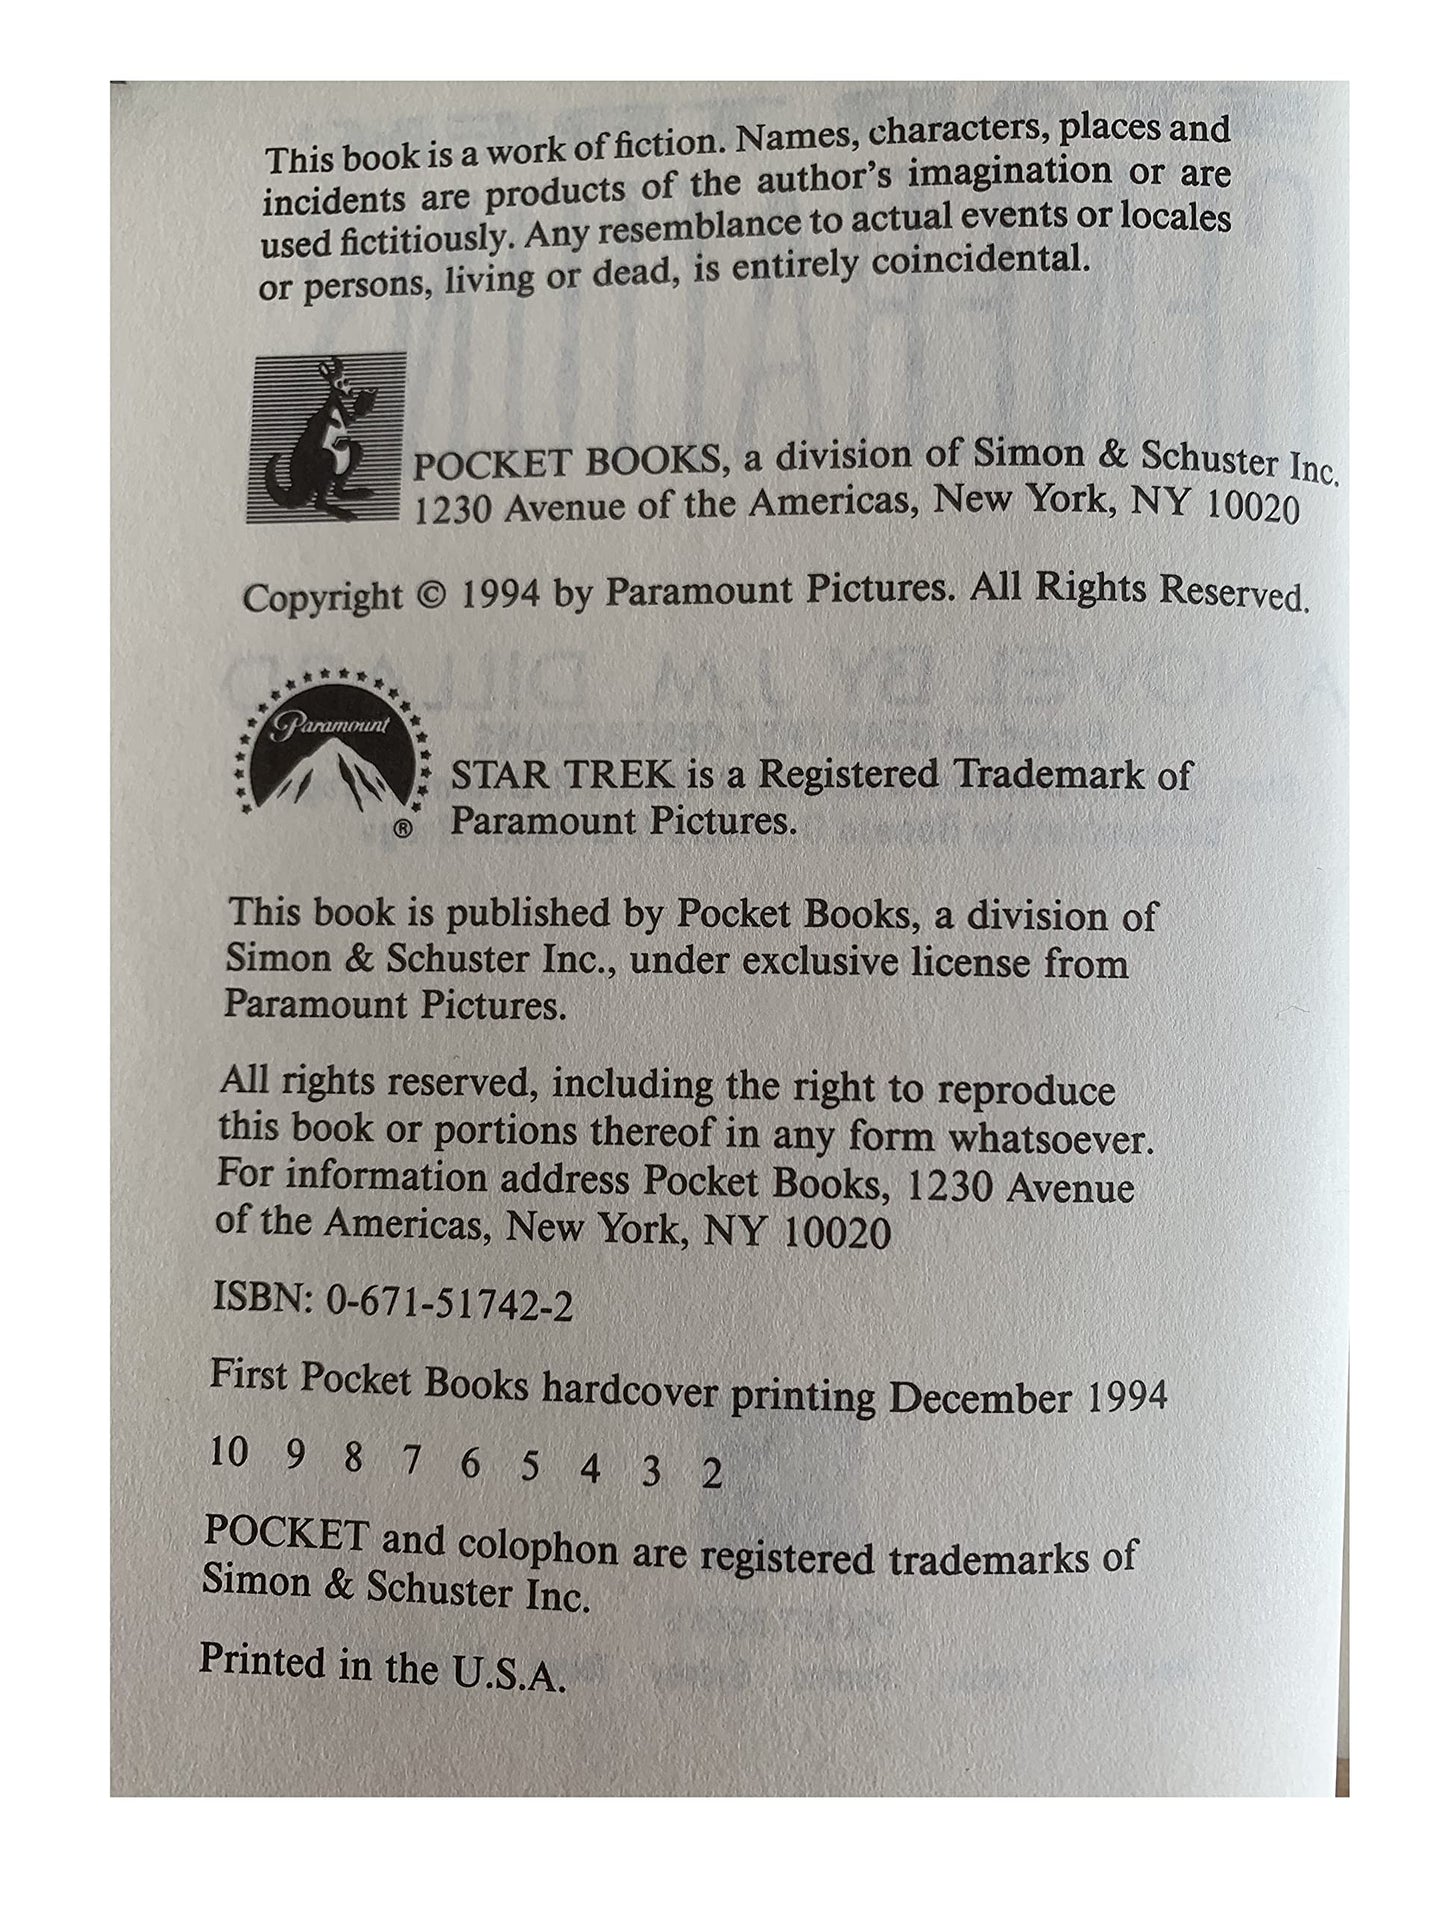 Vintage 1994 Star Trek Generations Hard Back Book - A Novel By J.M. Dillard - Unsold Shop Stock